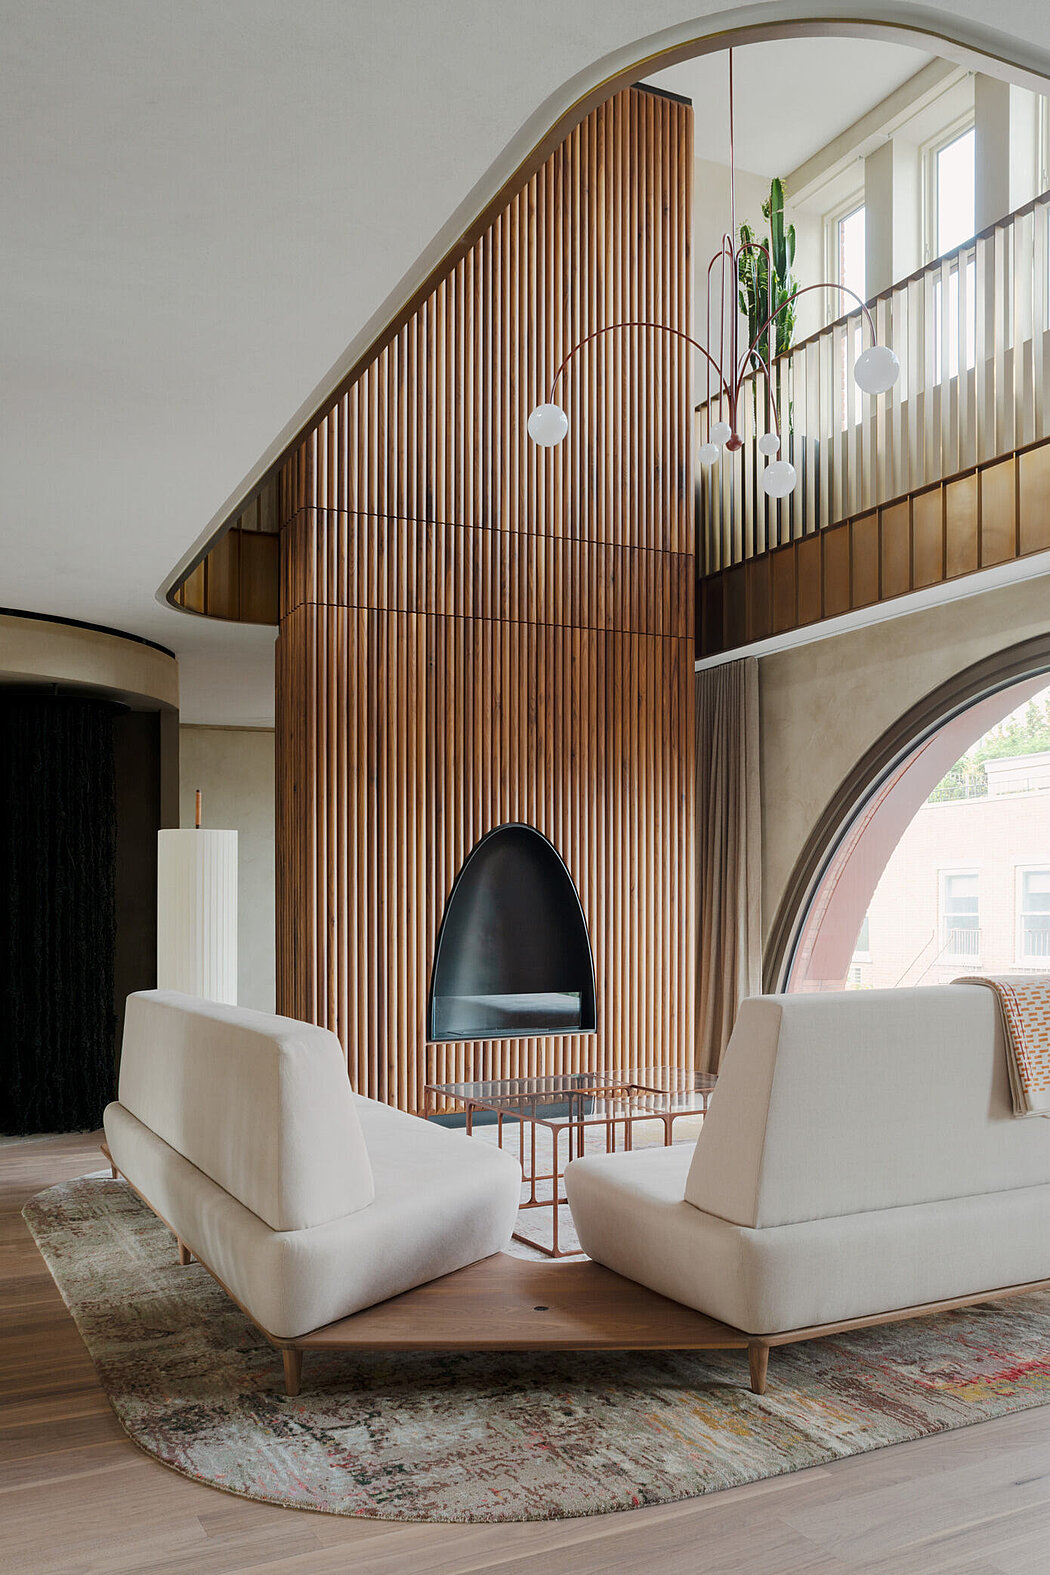 SoHo Triplex: Architectural Gem in New York’s Artistic Heart - 1